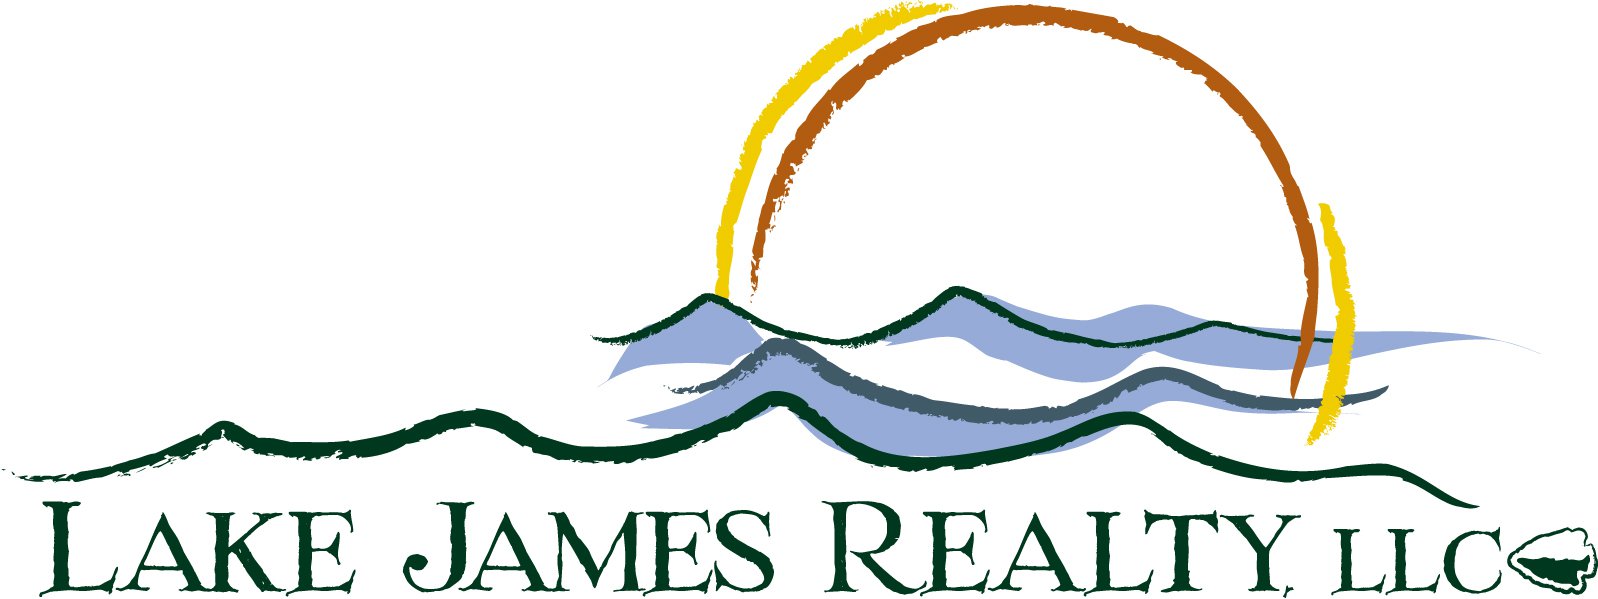 Lake James Realty logo